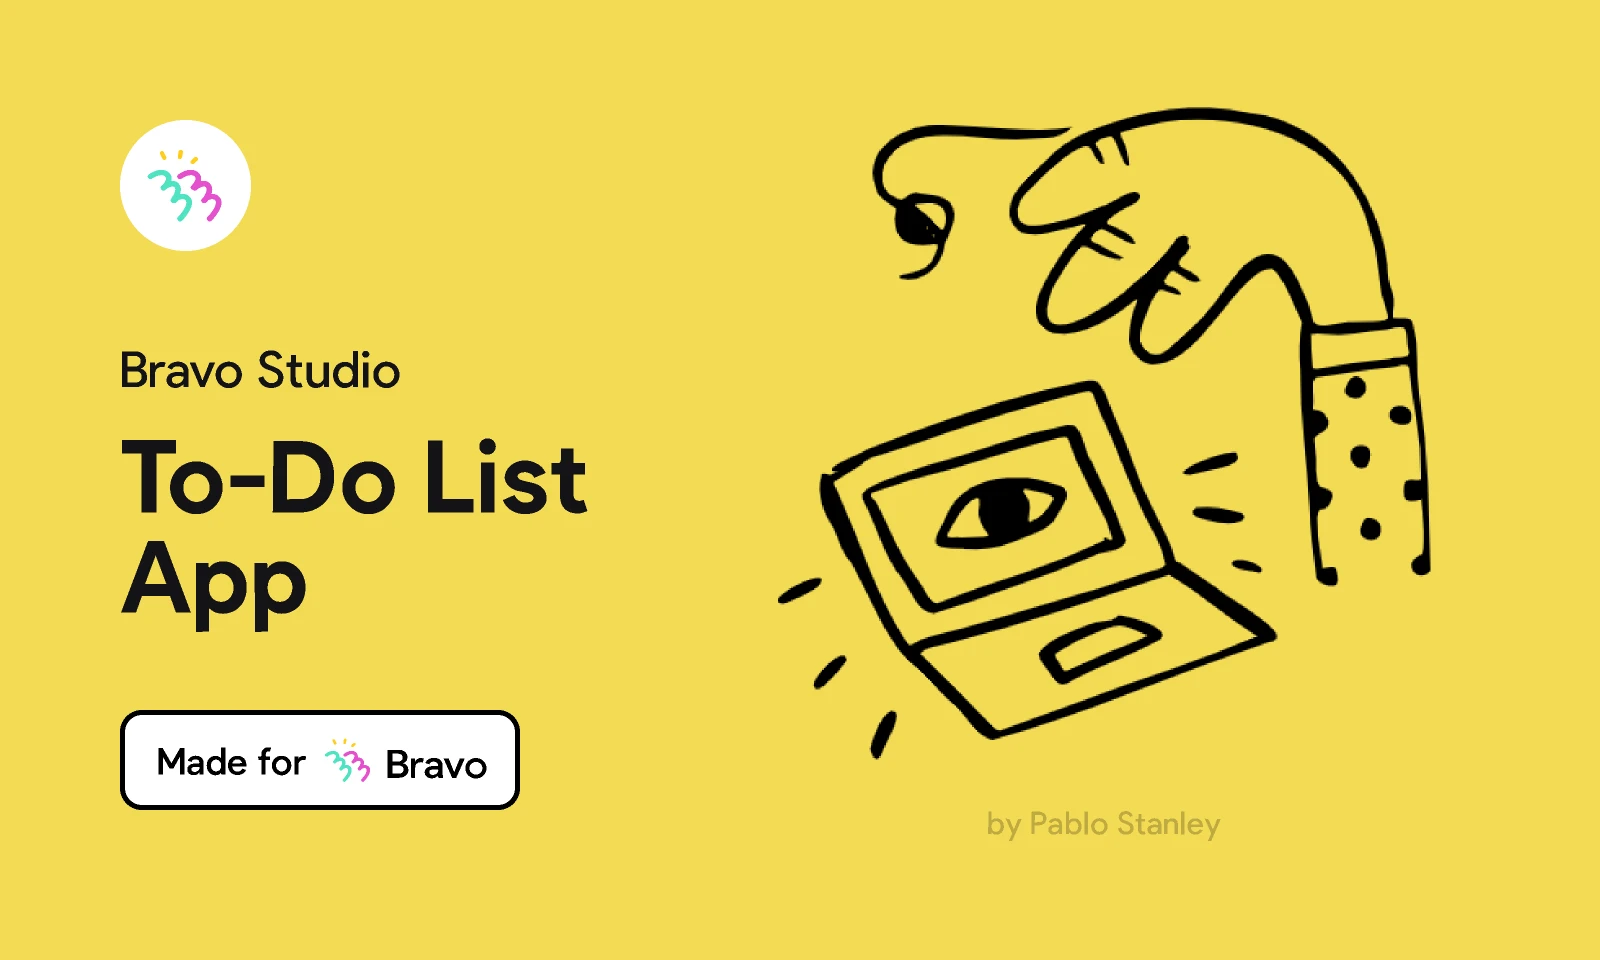 Bravo Sample: To-do list for Figma and Adobe XD